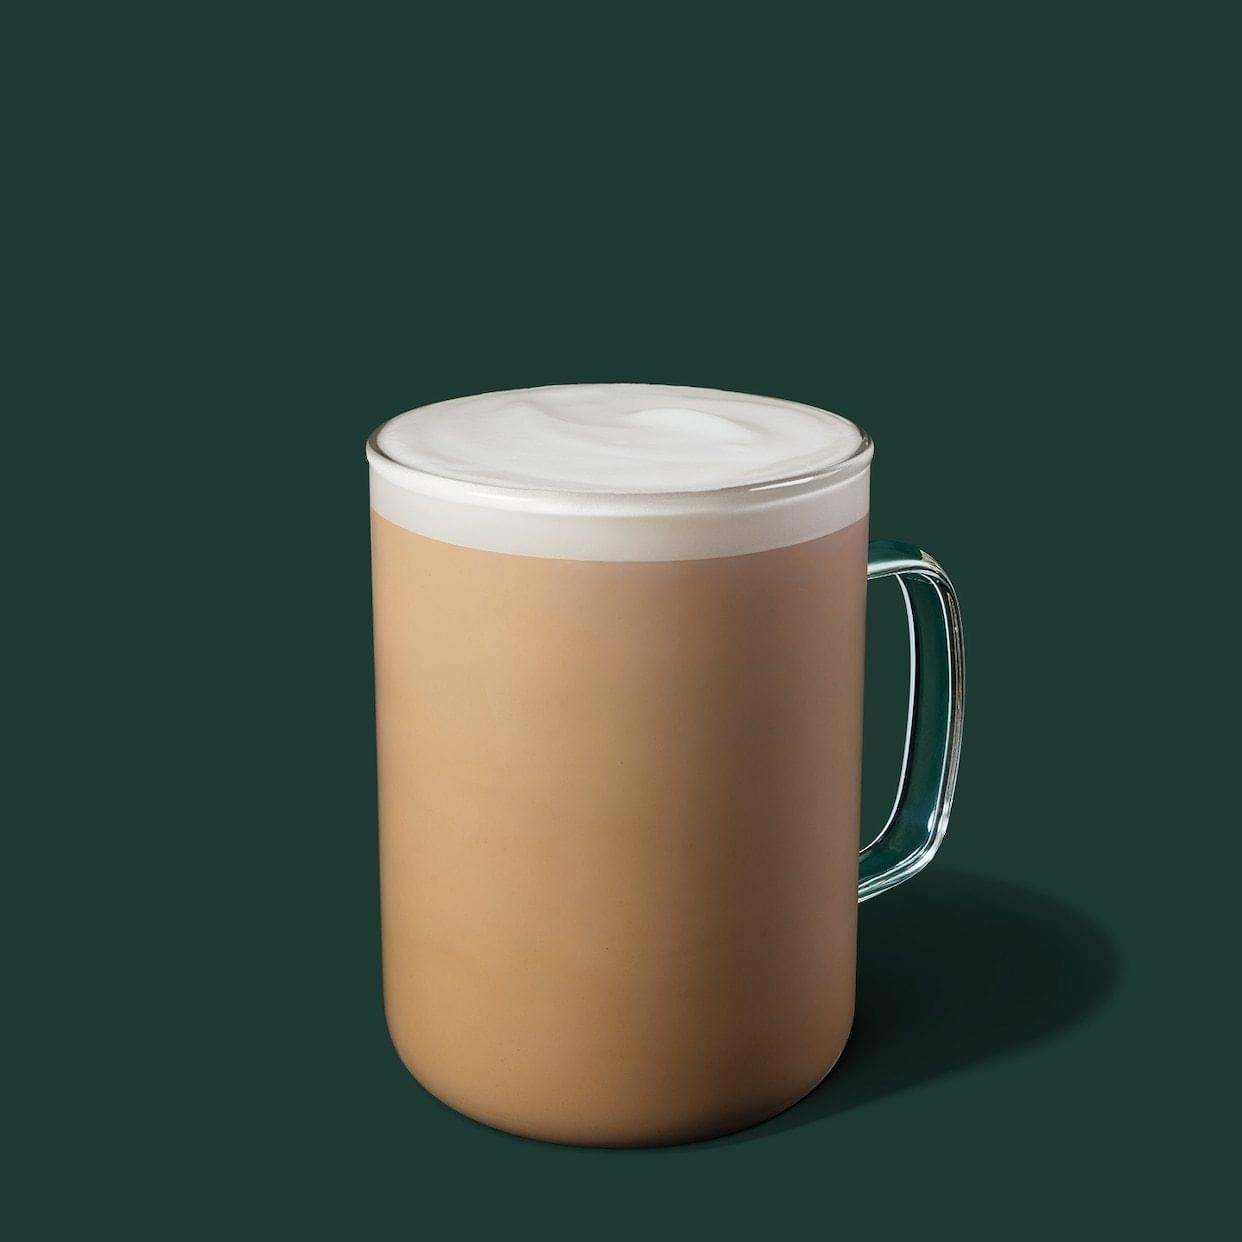 Starbucks Short Chai Latte Nutrition Facts